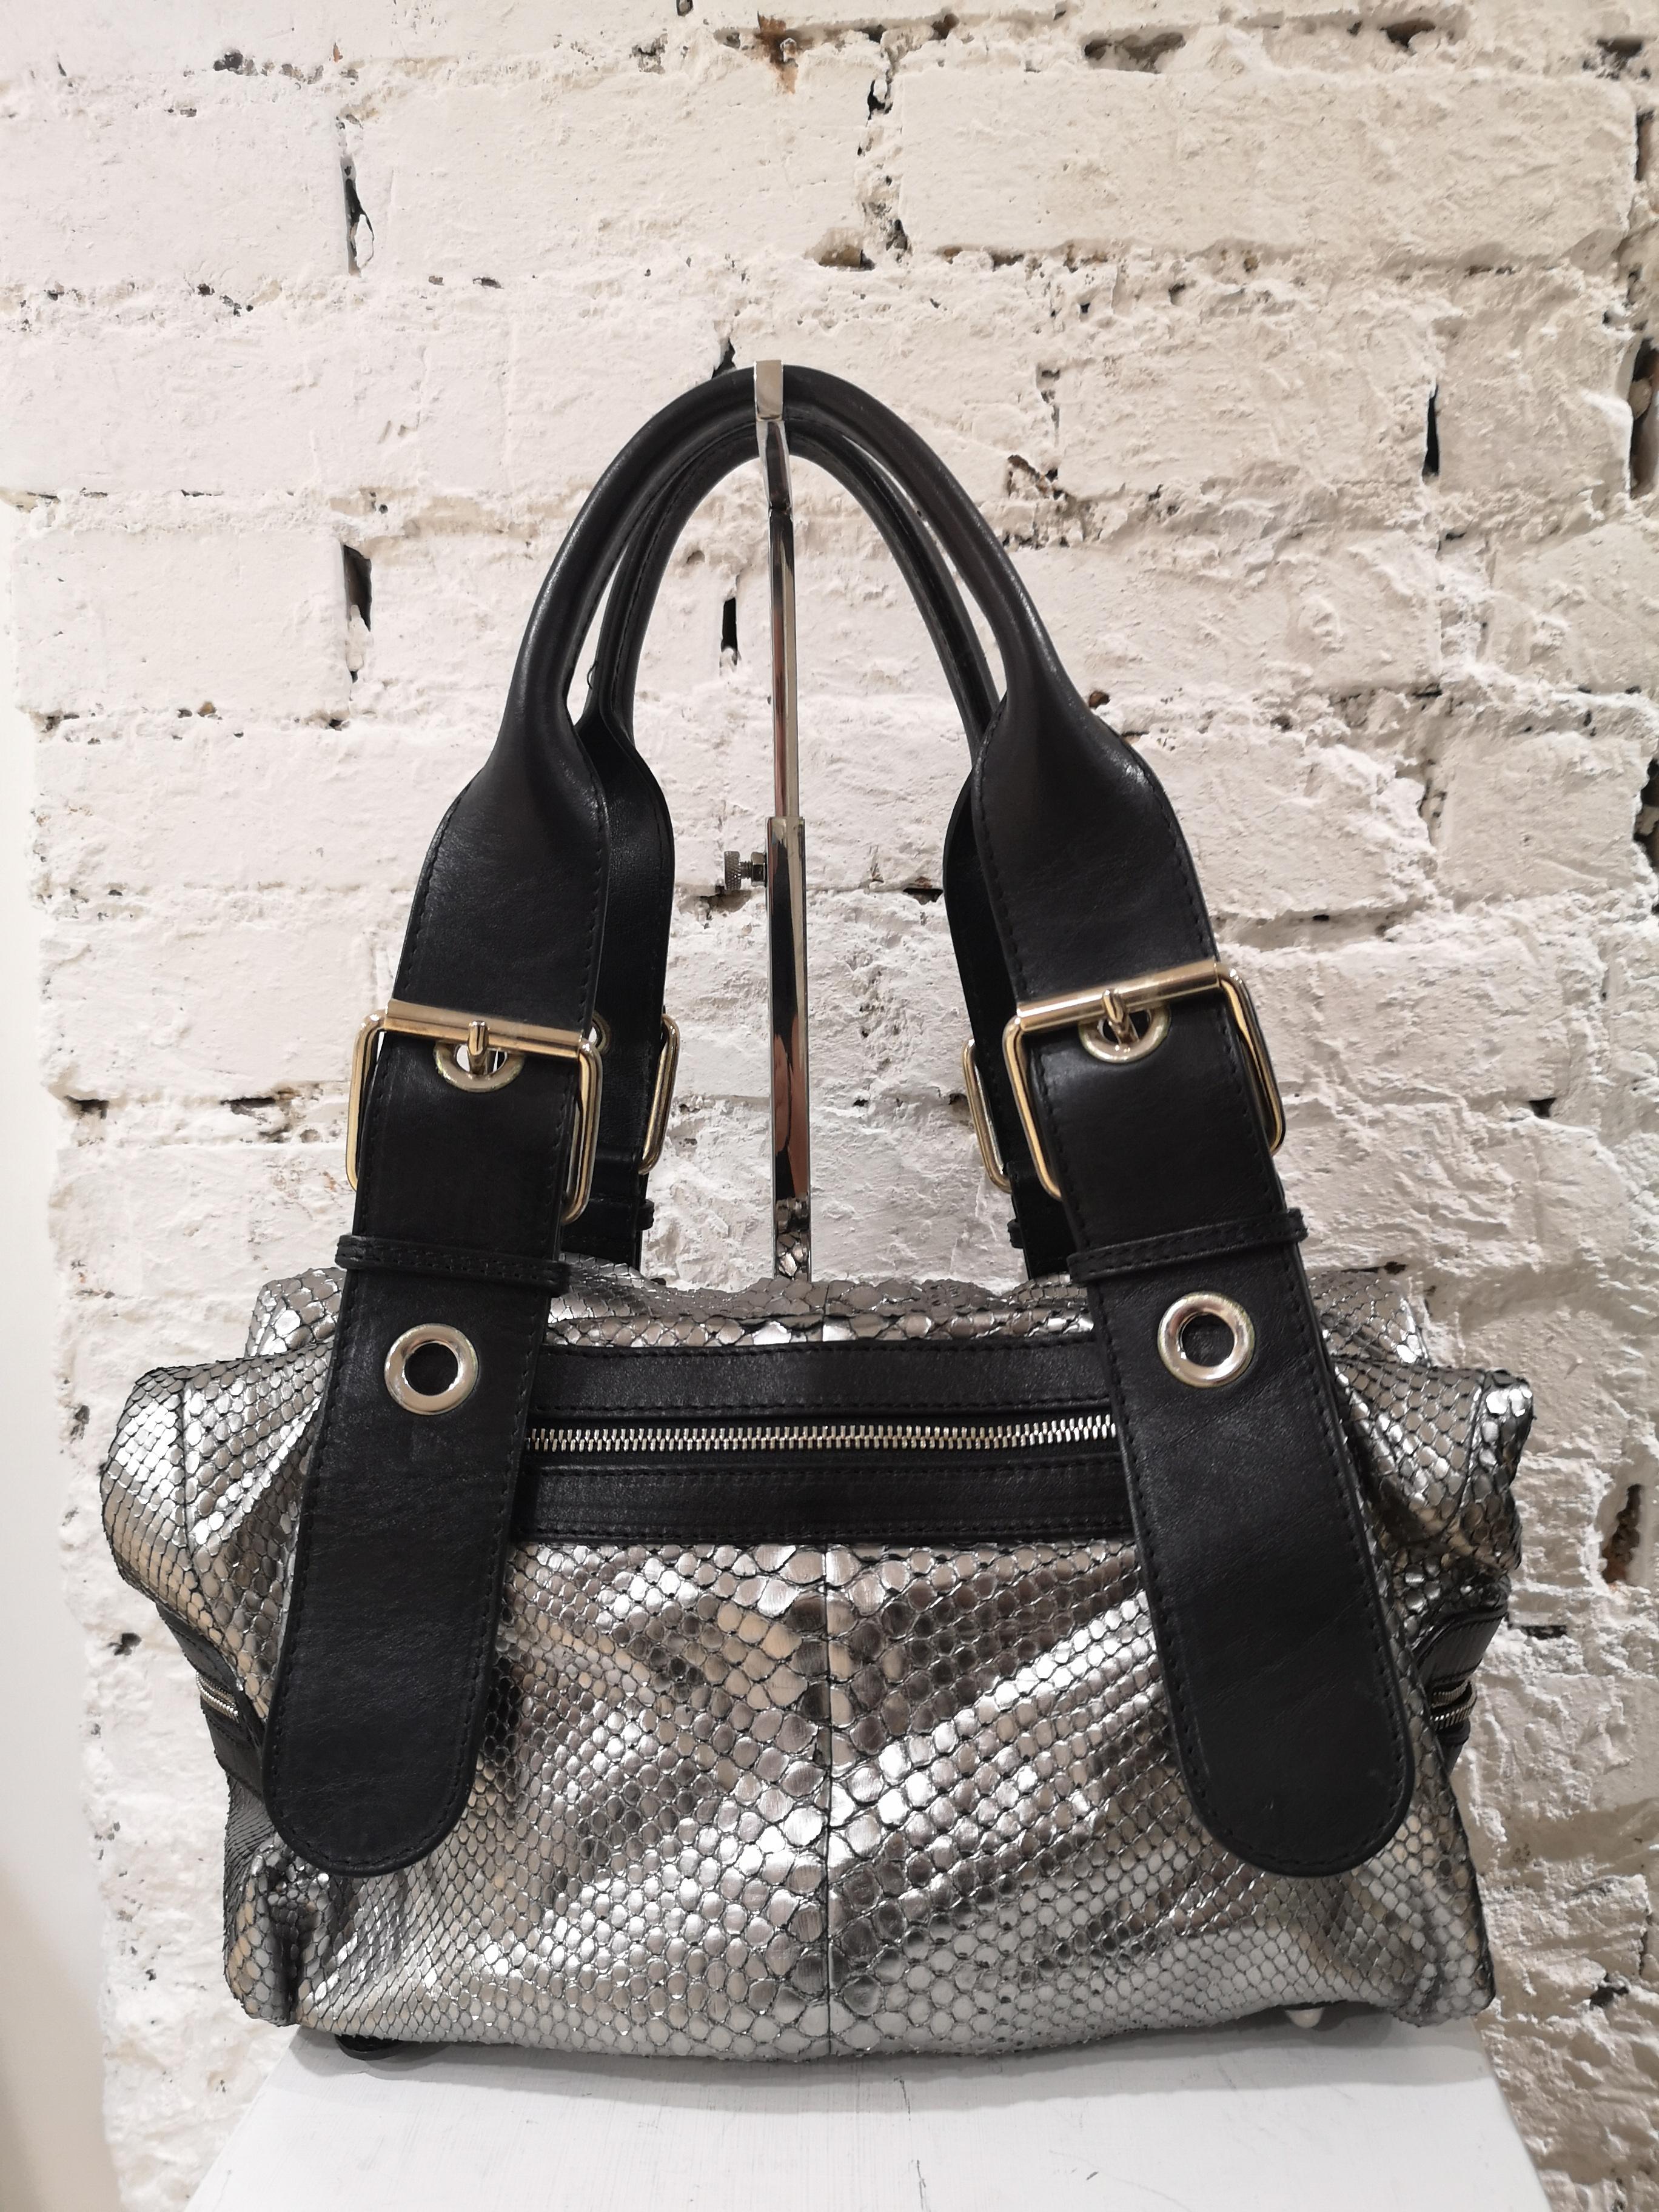 Chloè silver python skin black leather handbag 9